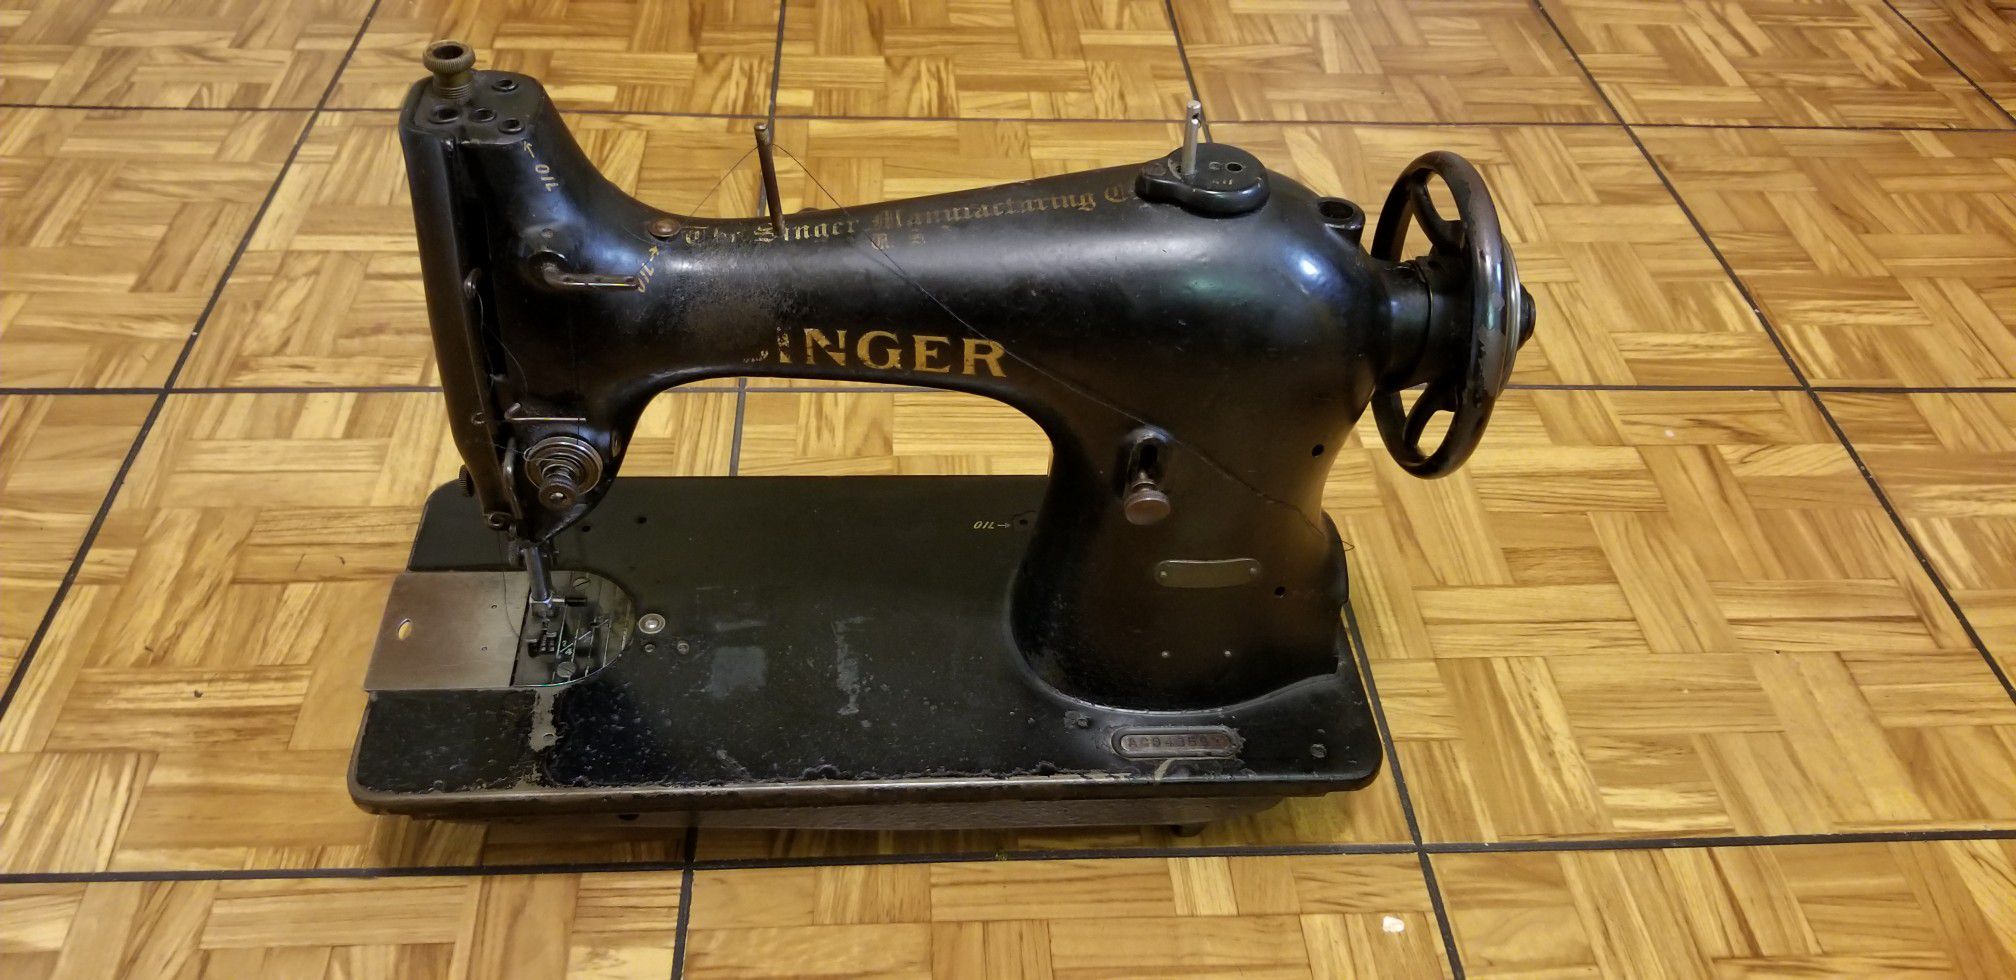 Industrial Singer sewing machine